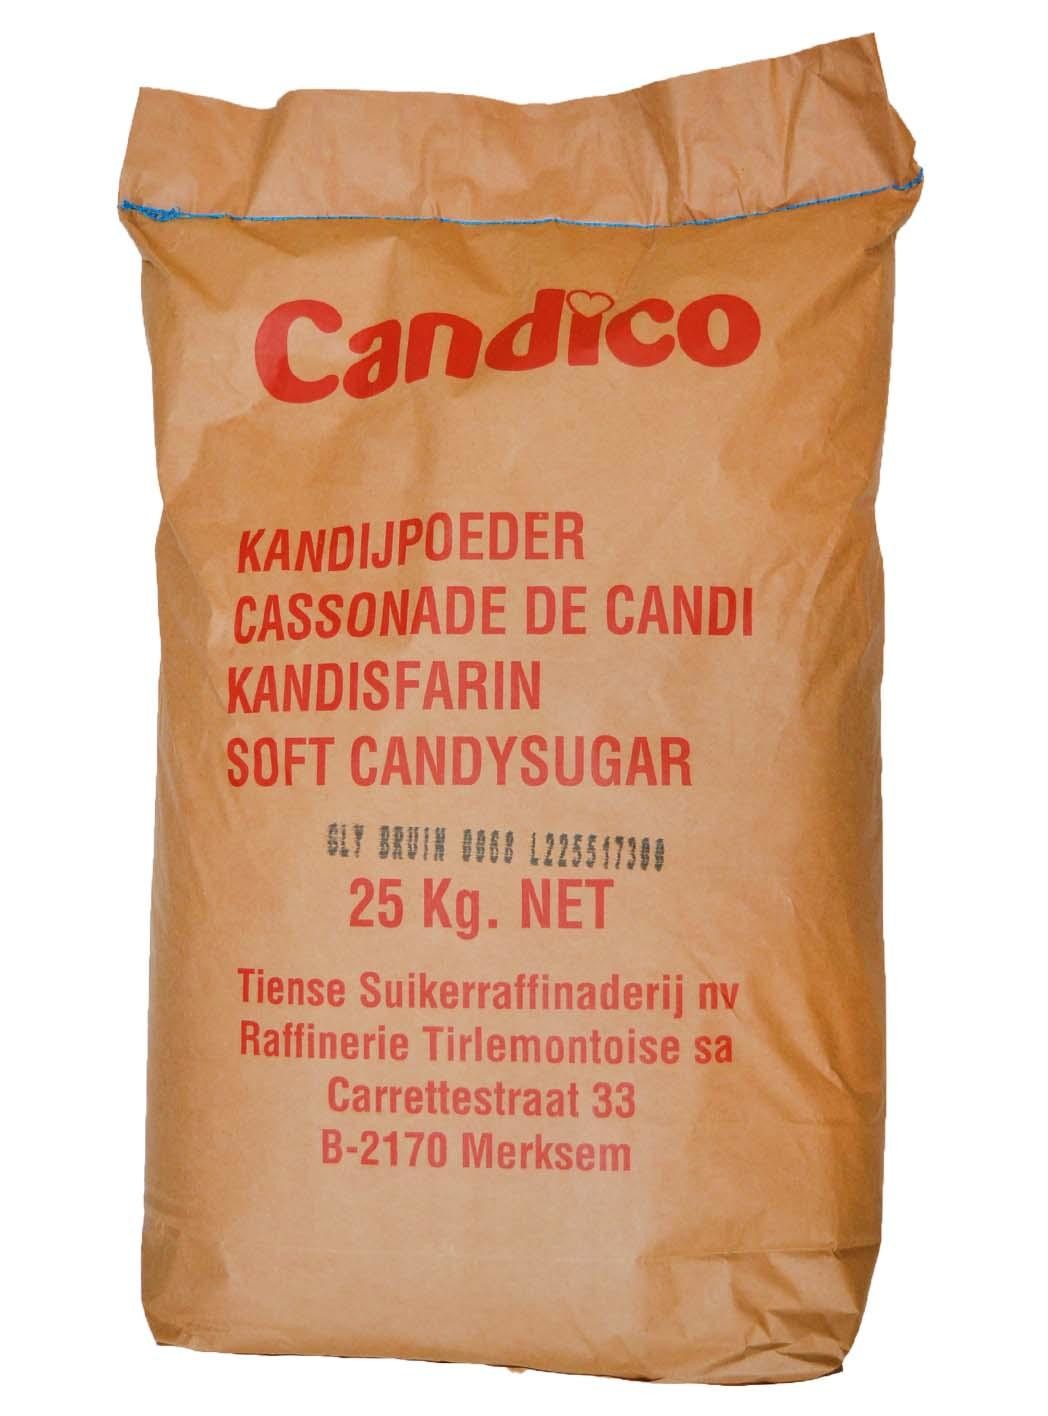 Cassonade de candi brune foncé 2kg Candico - Nevejan